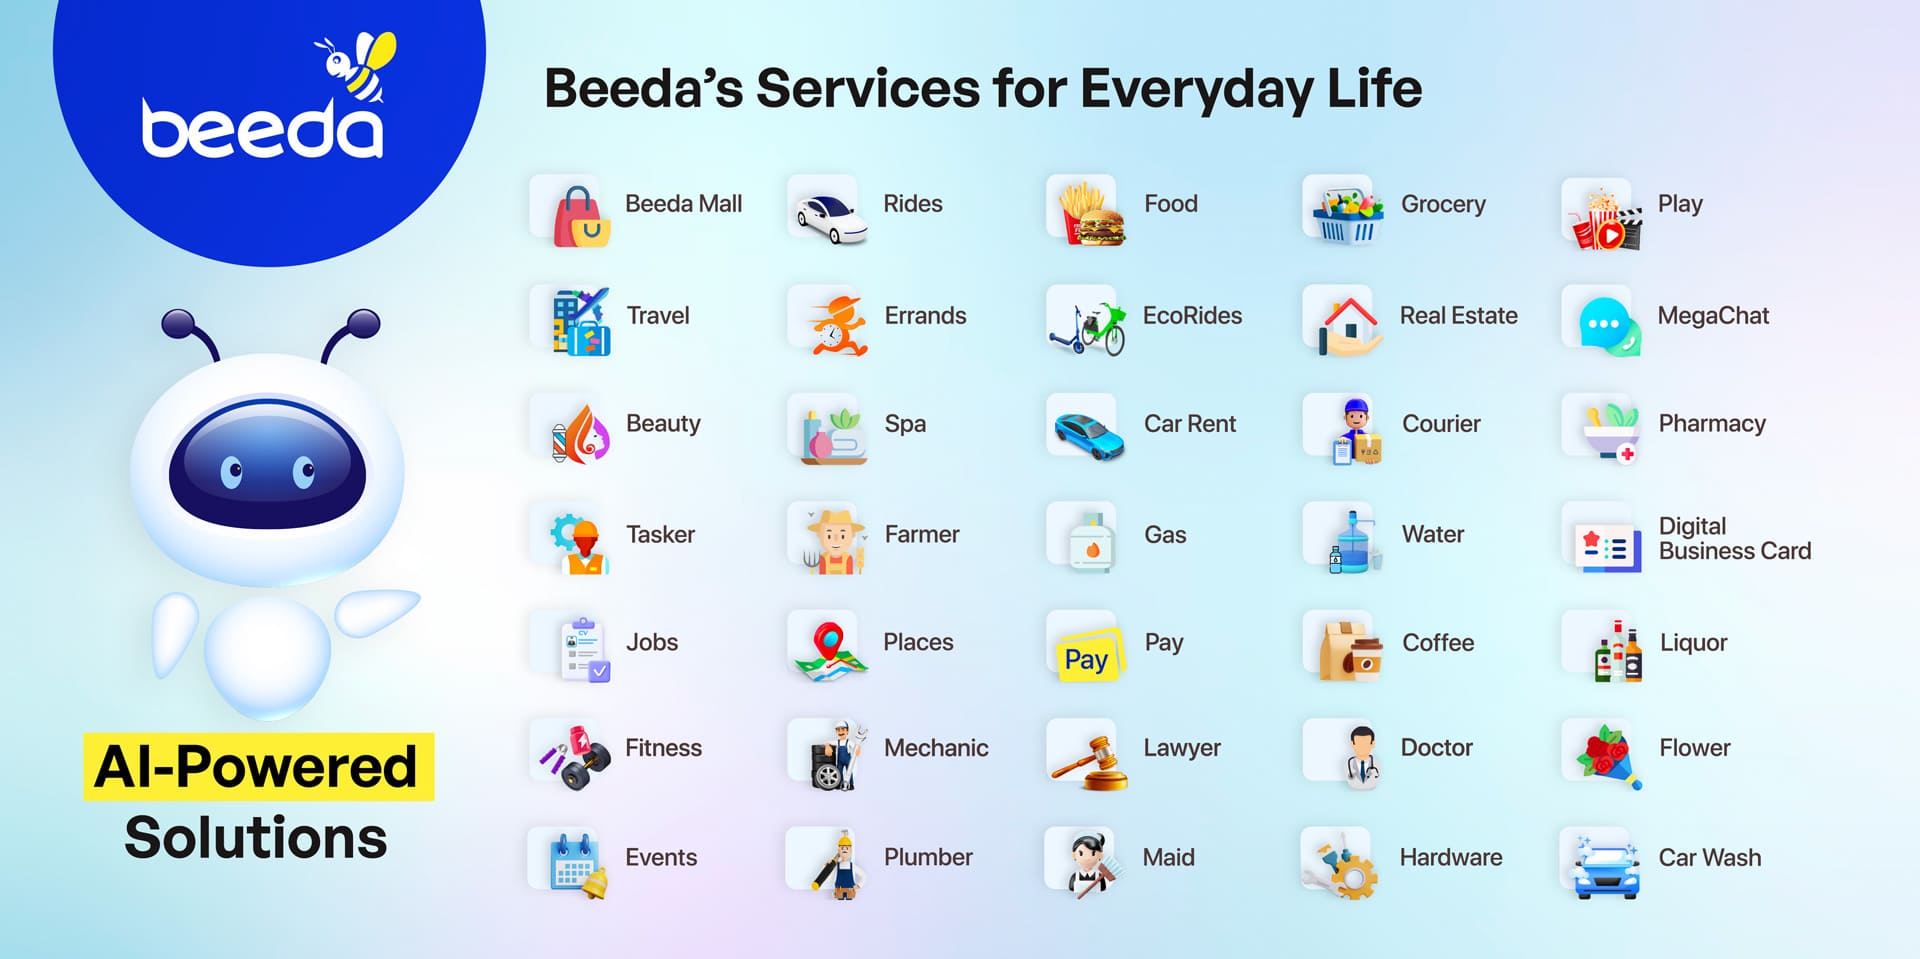 Beedas Services for Everyday Life